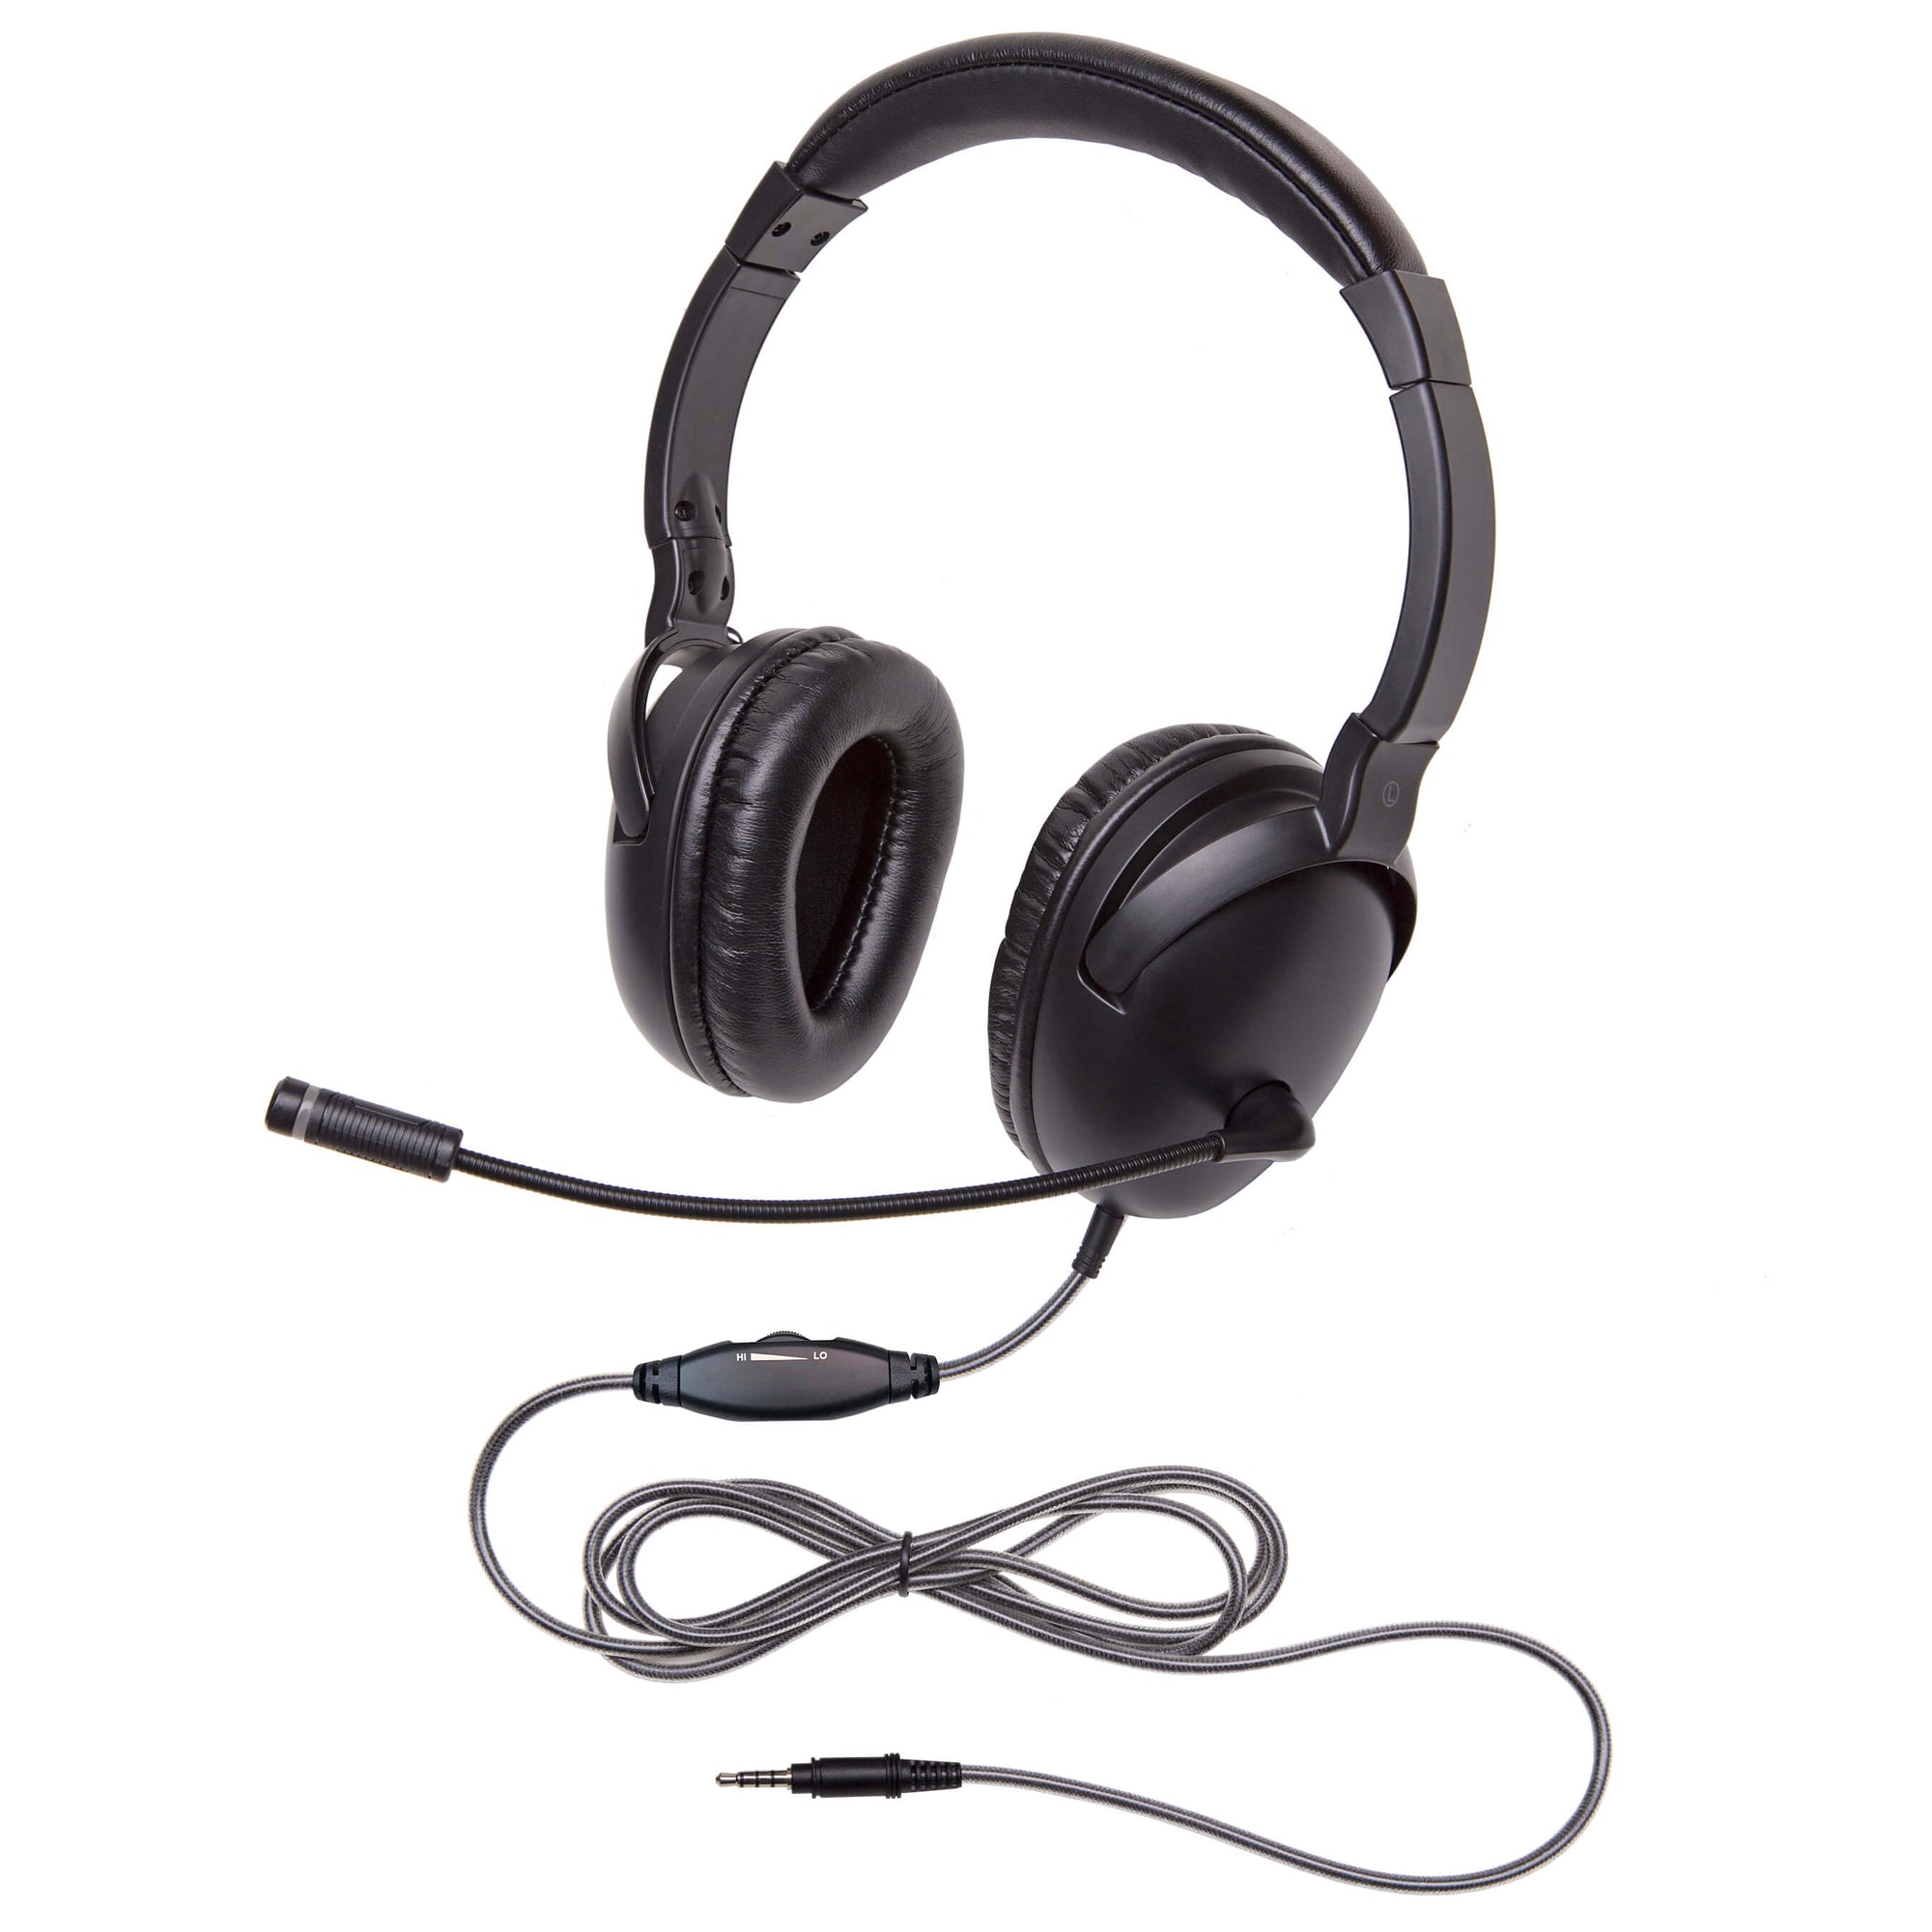 Califone NeoTech Plus Headset - Learning Headphones